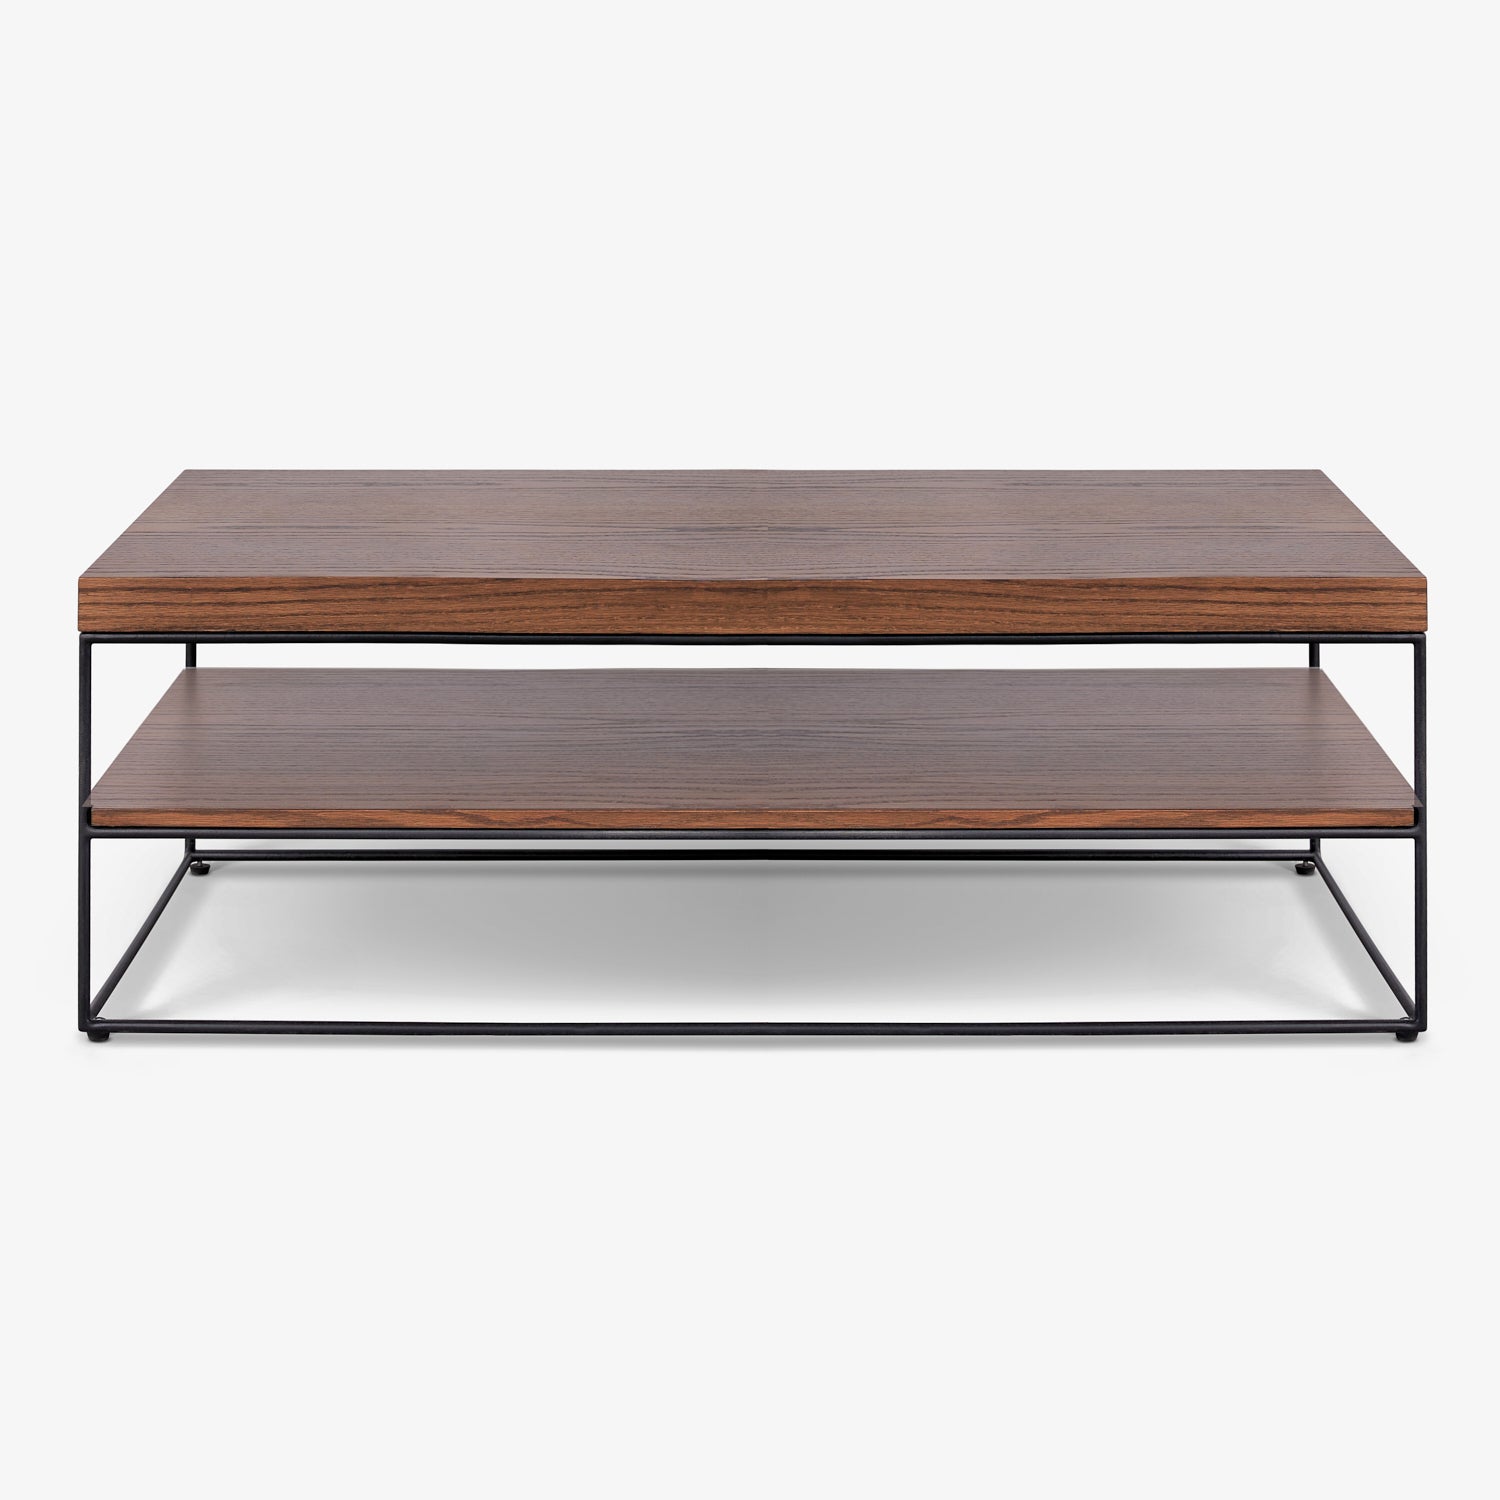 COCOA | שולחן עץ בשילוב ברזל לסלון